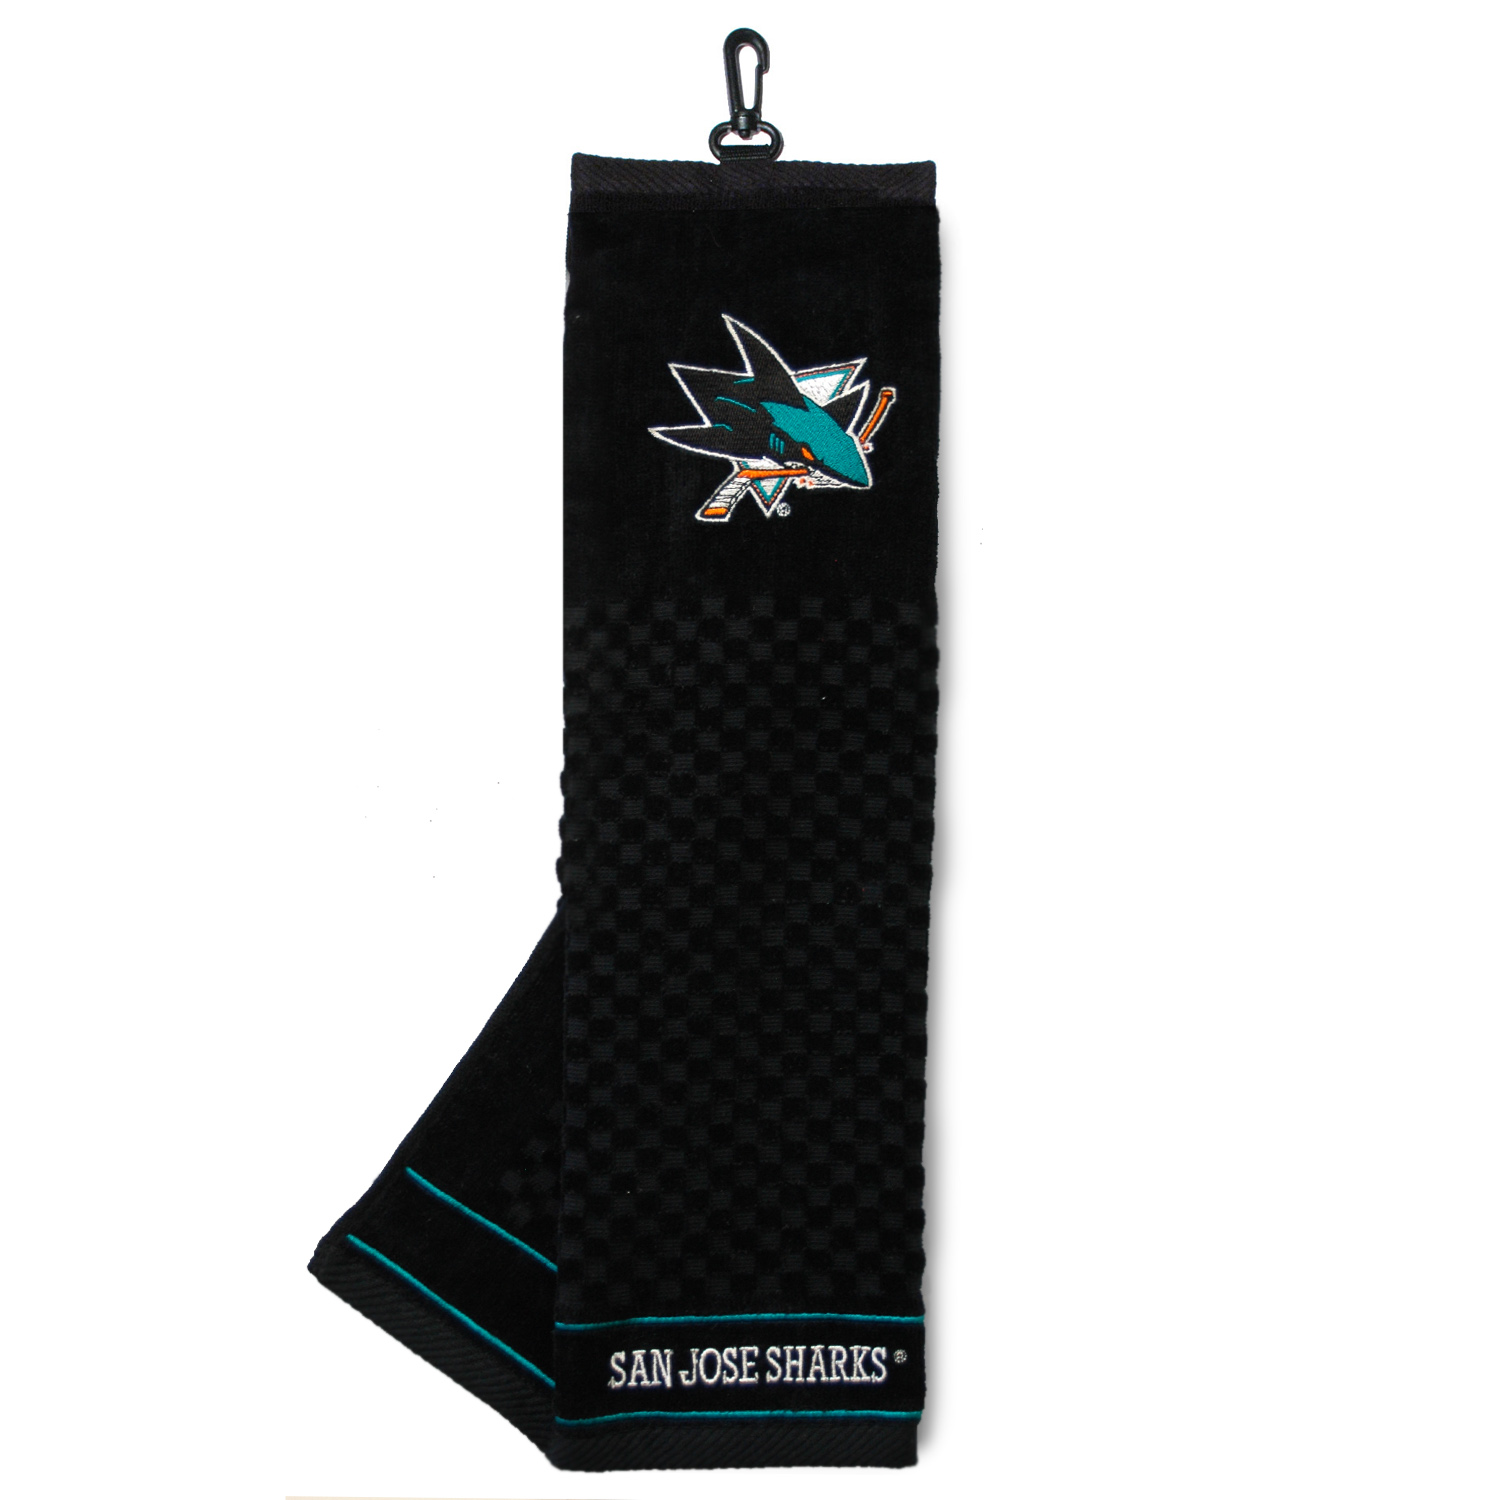 San Jose Sharks Embroidered Towel